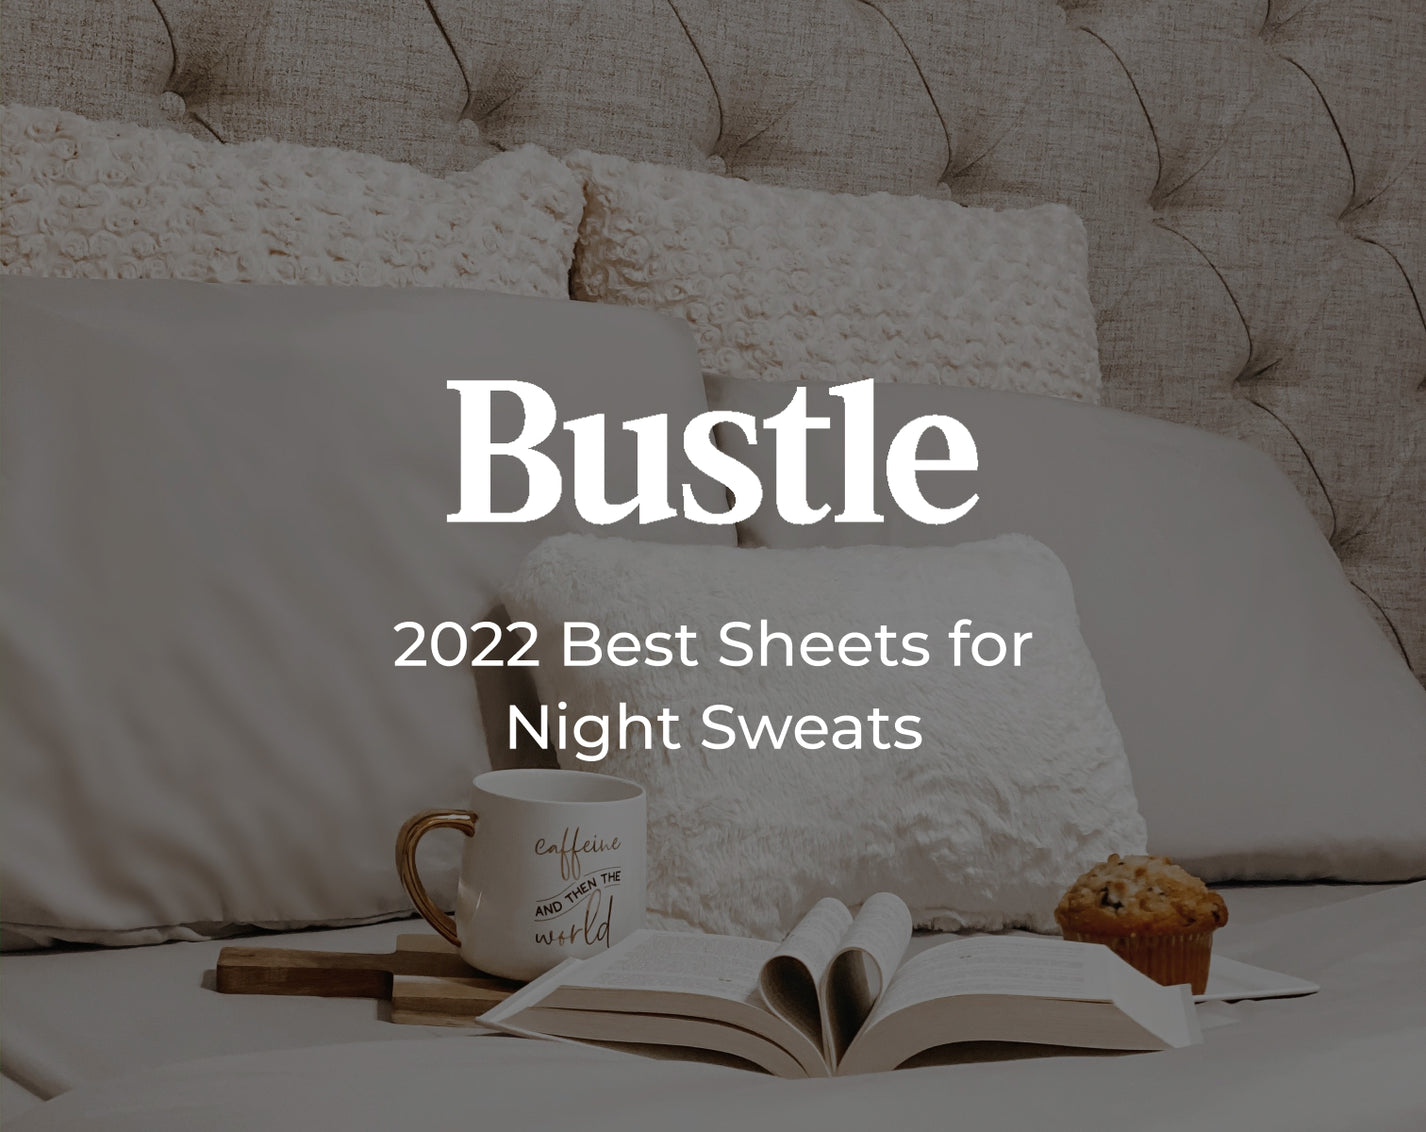 Bustle: 2022 Best Sheets for Night Sweats